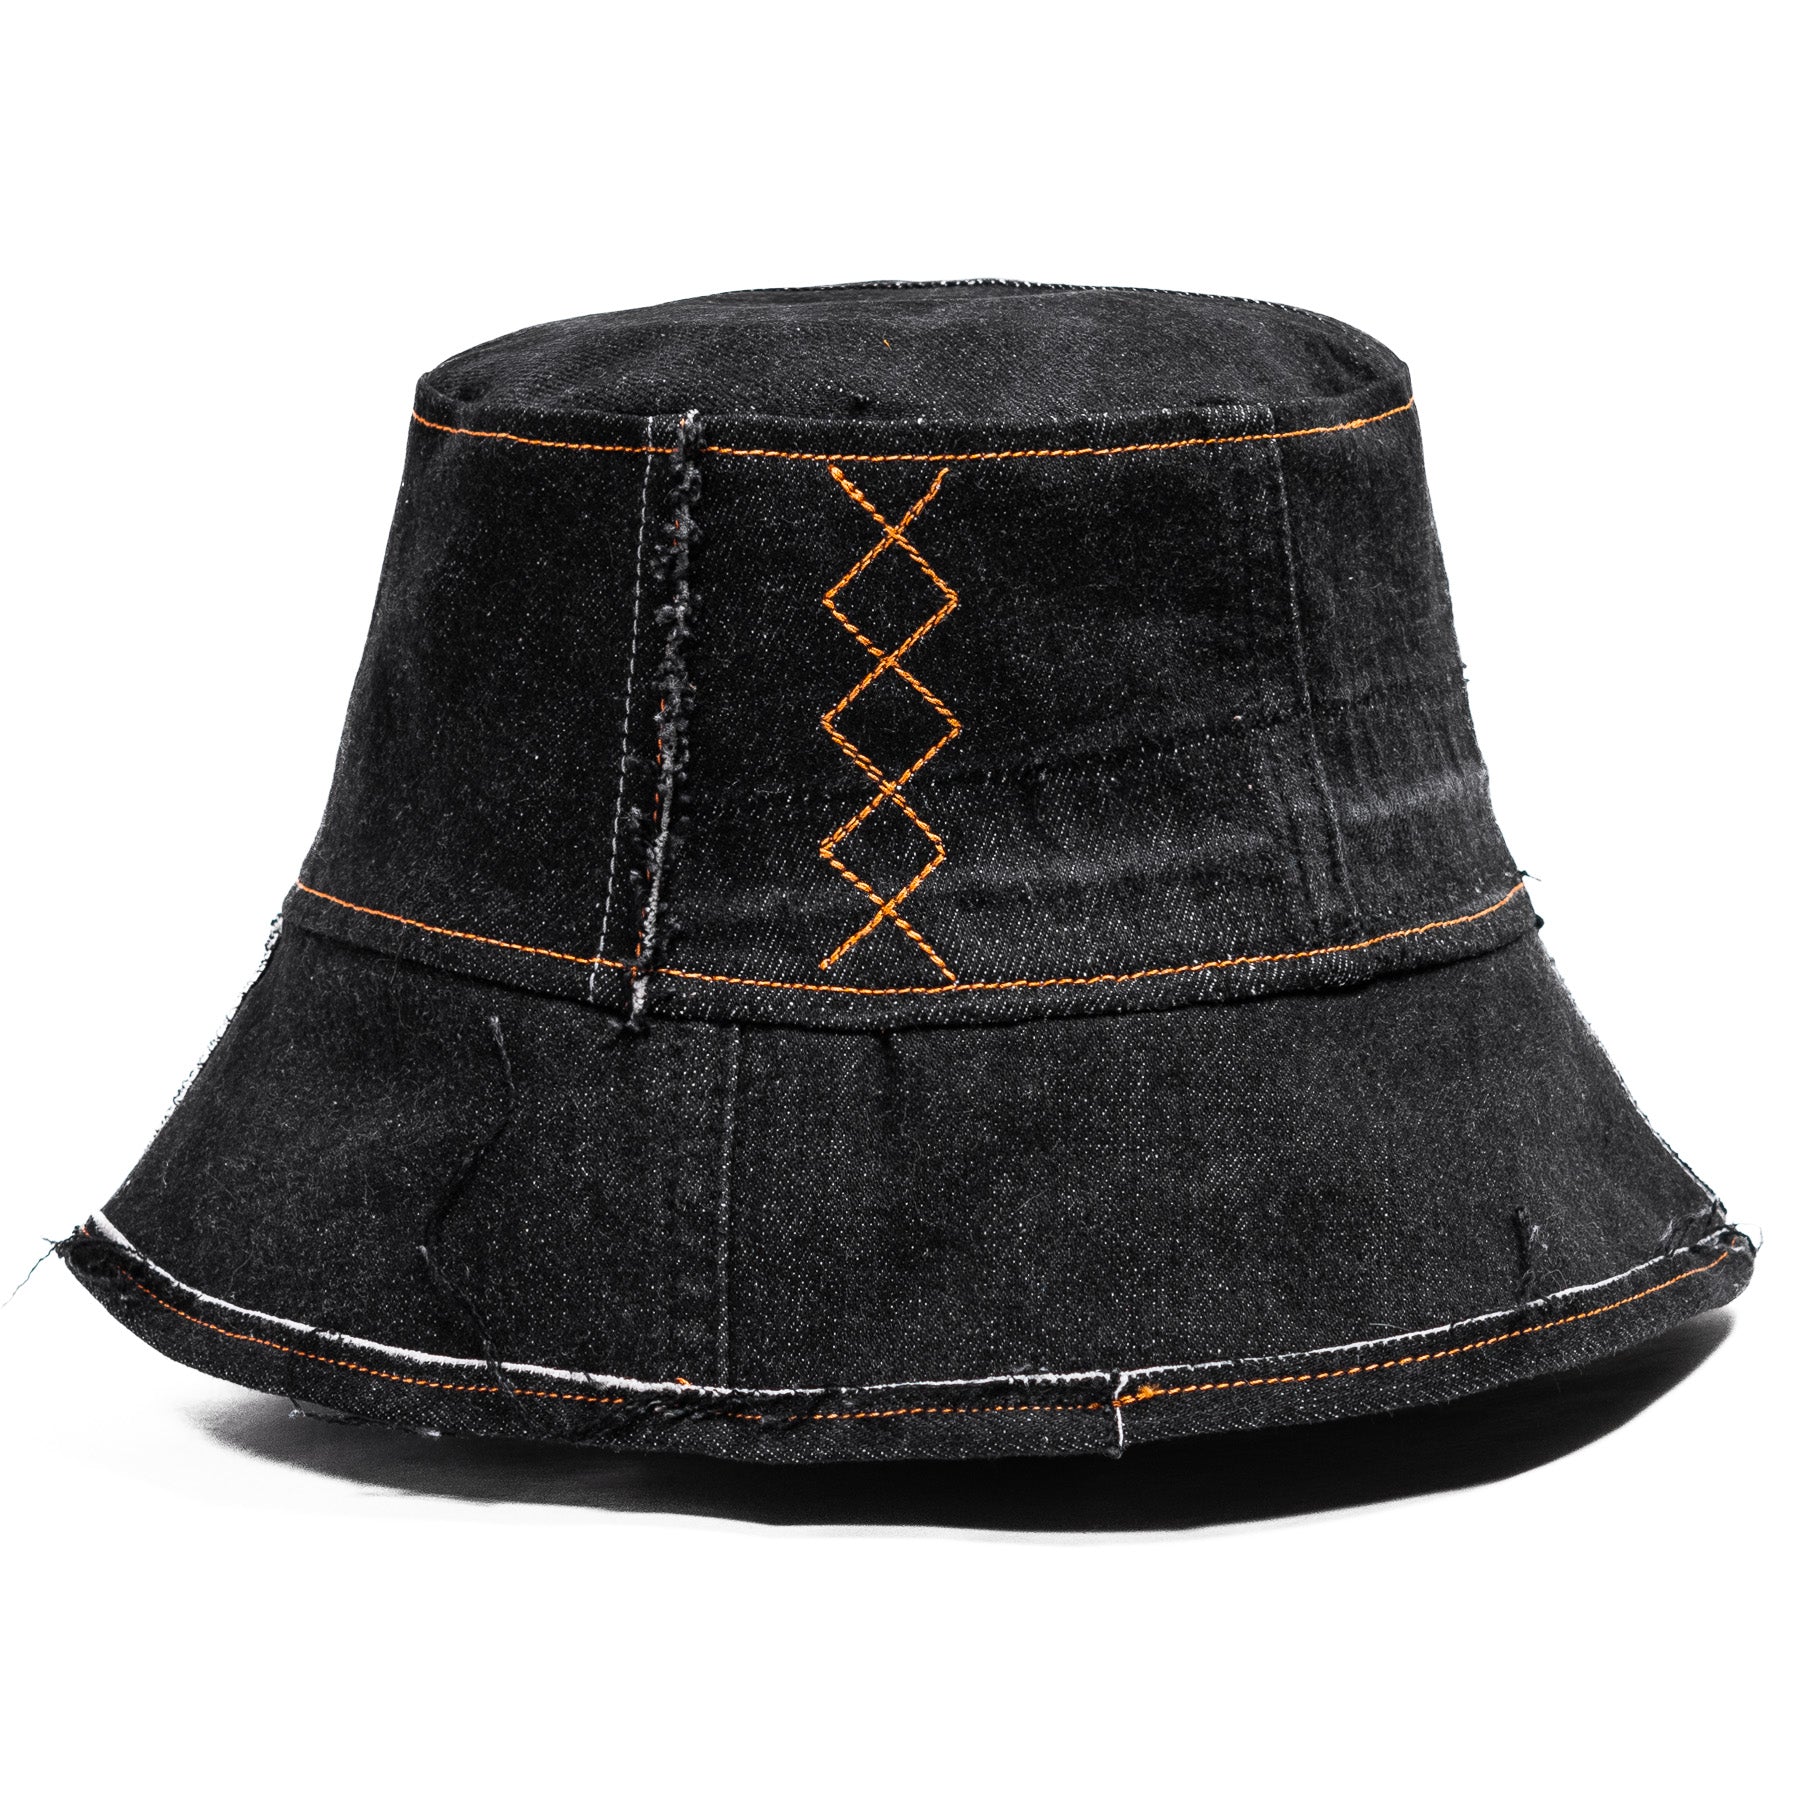 Mursaki Denim Chop Shop Bucket Hat - Rinsed Black